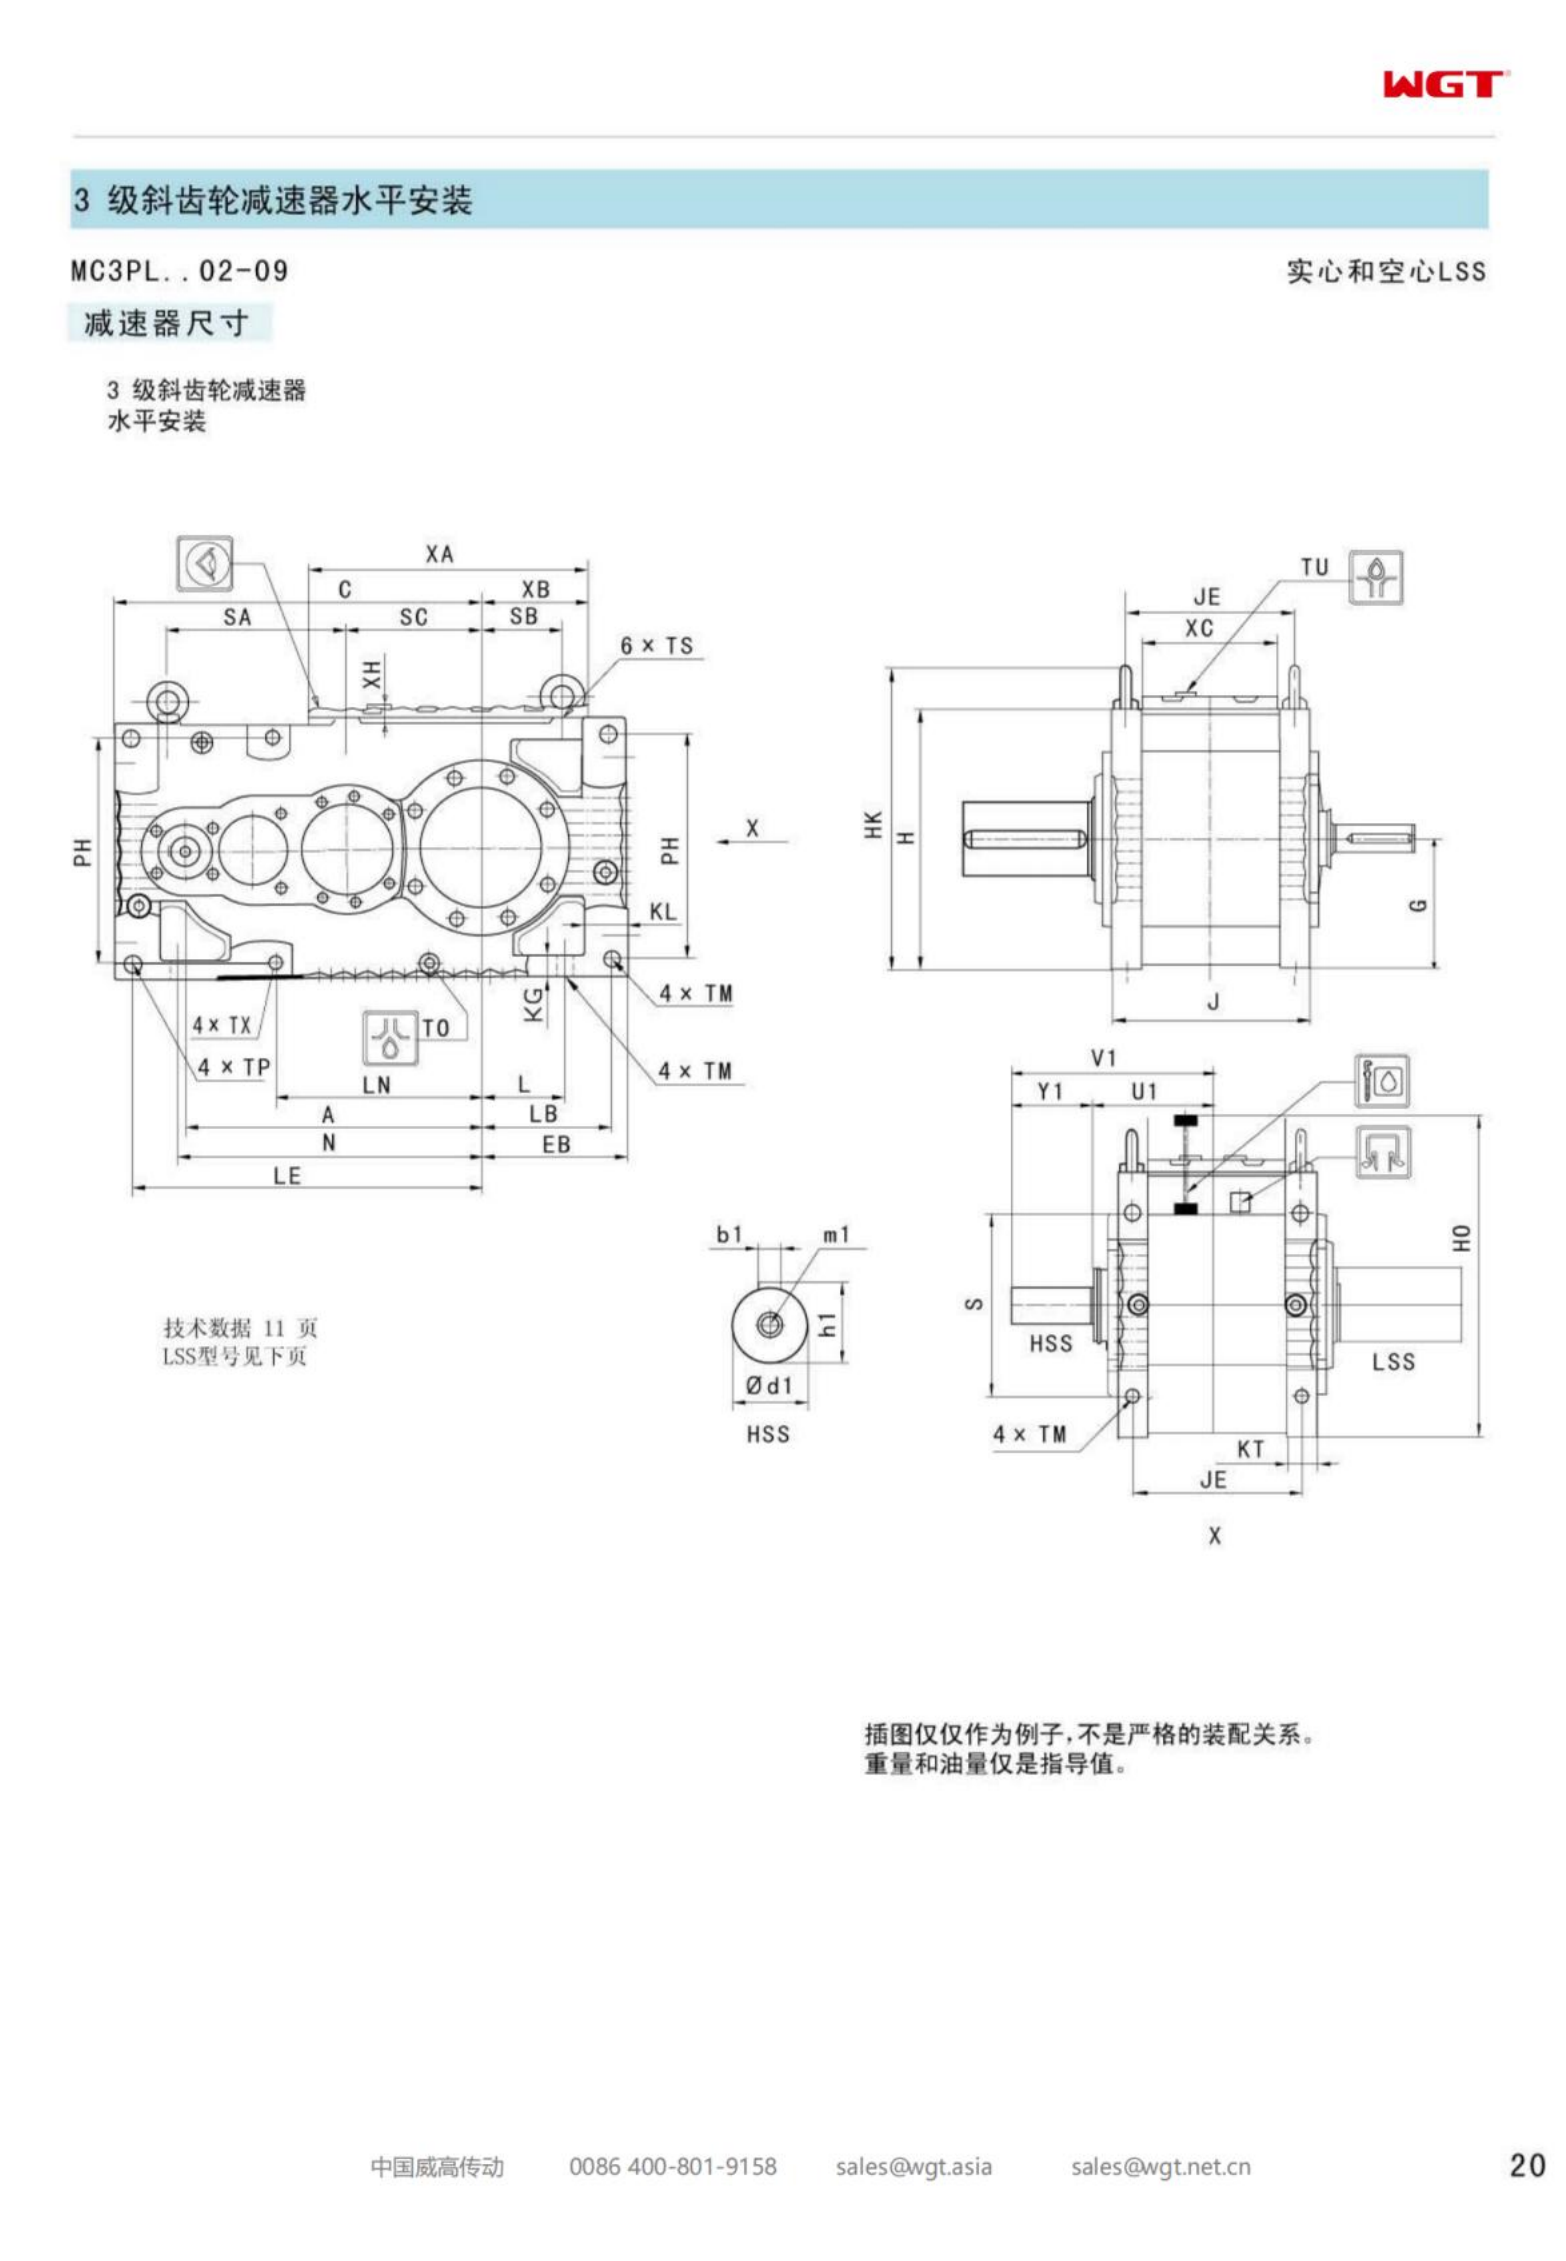 MC3PLHT08 replaces _SEW_MC_Series gearbox (patent)